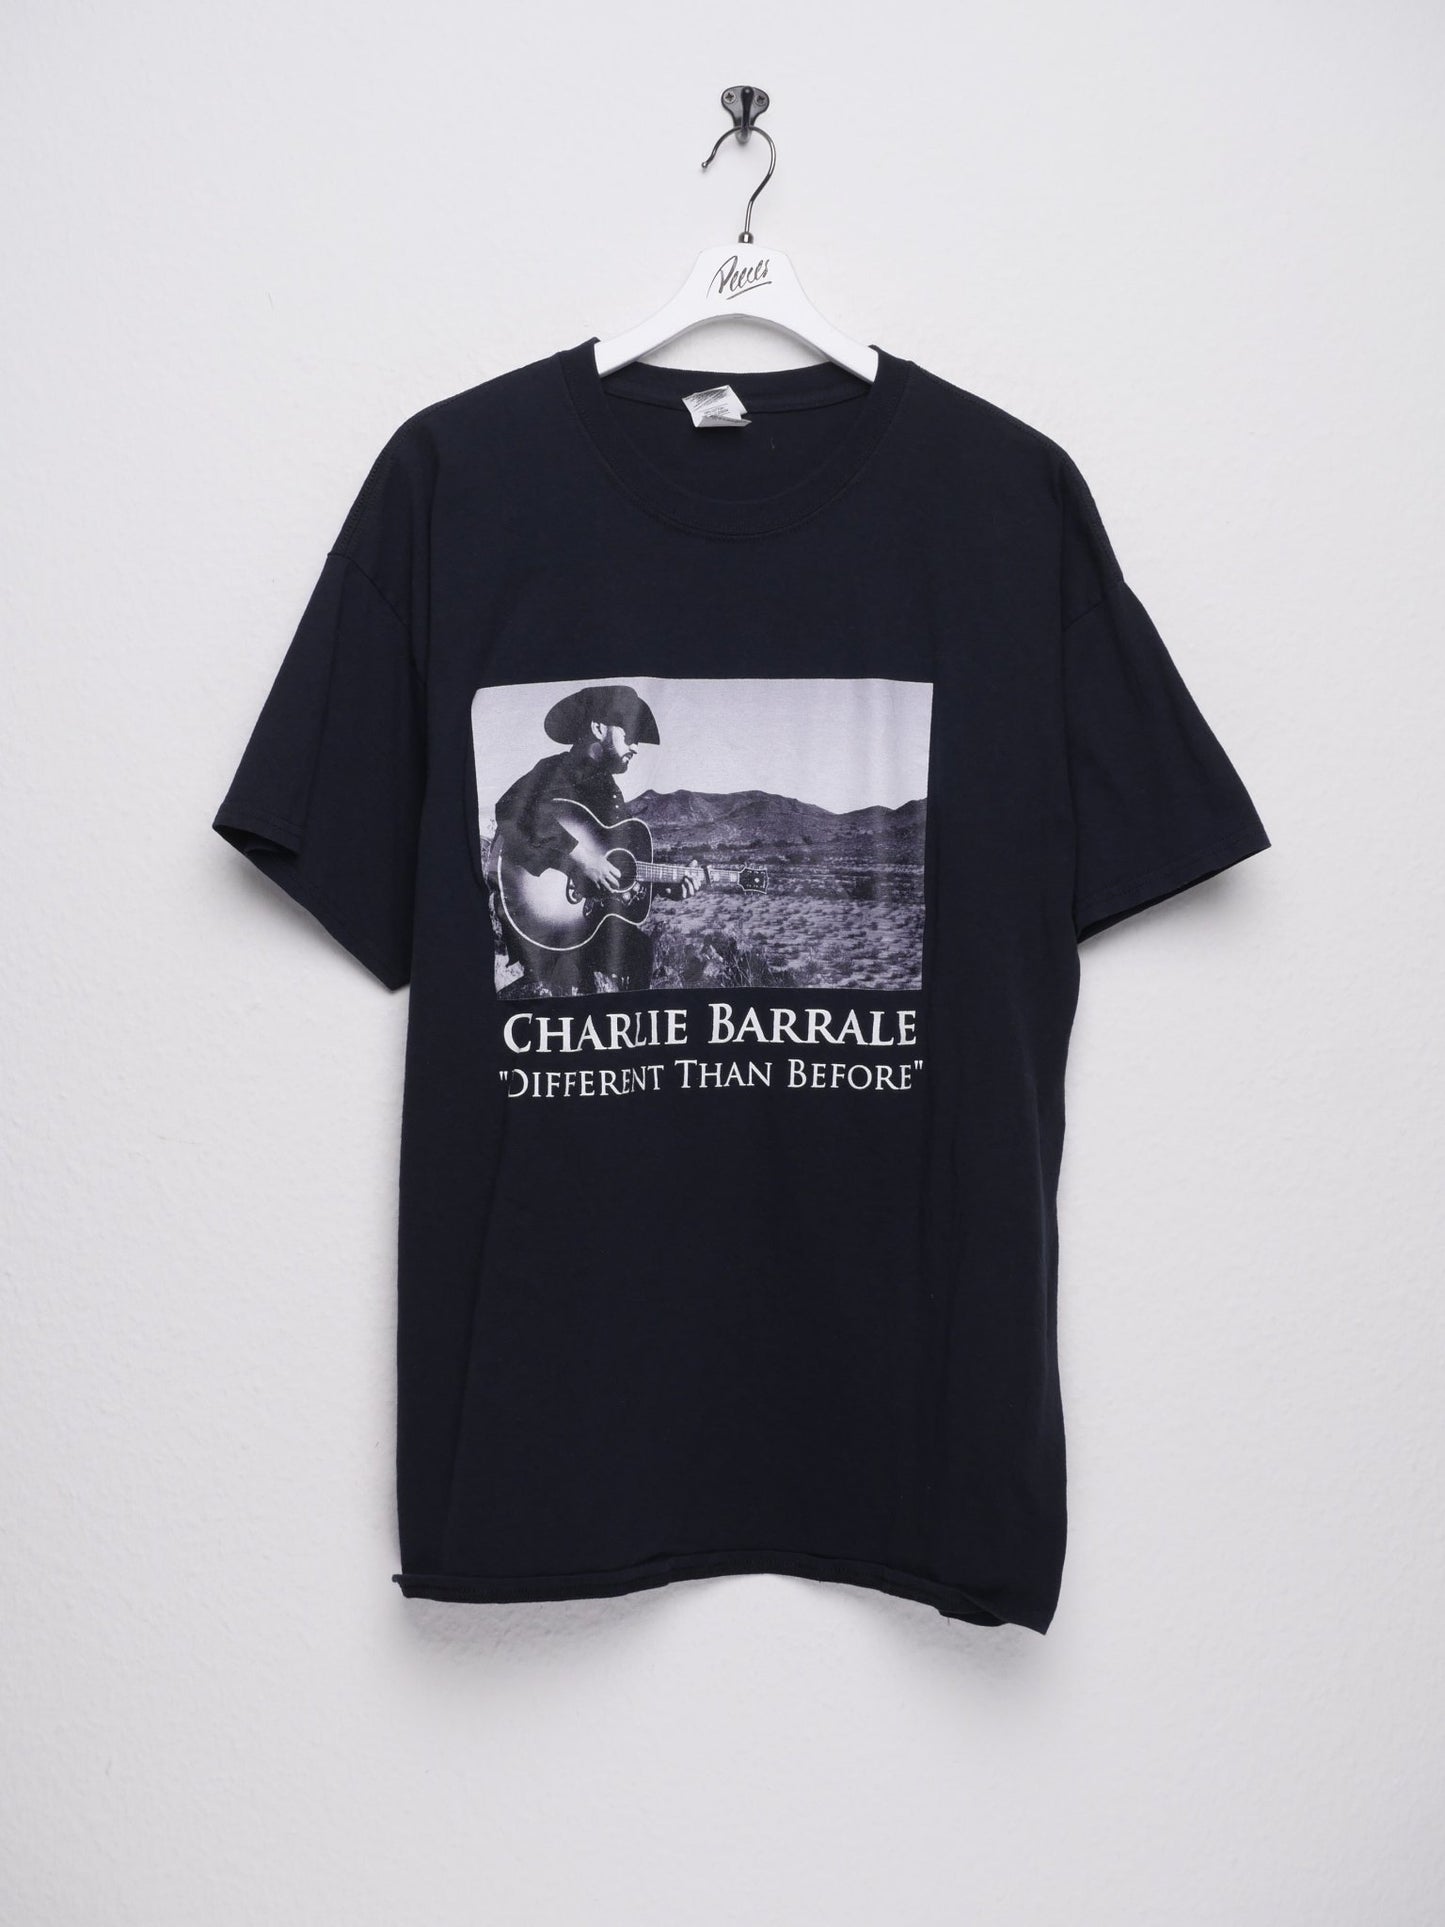 gildan printed 'Charlie Barrale' Graphic black Shirt - Peeces